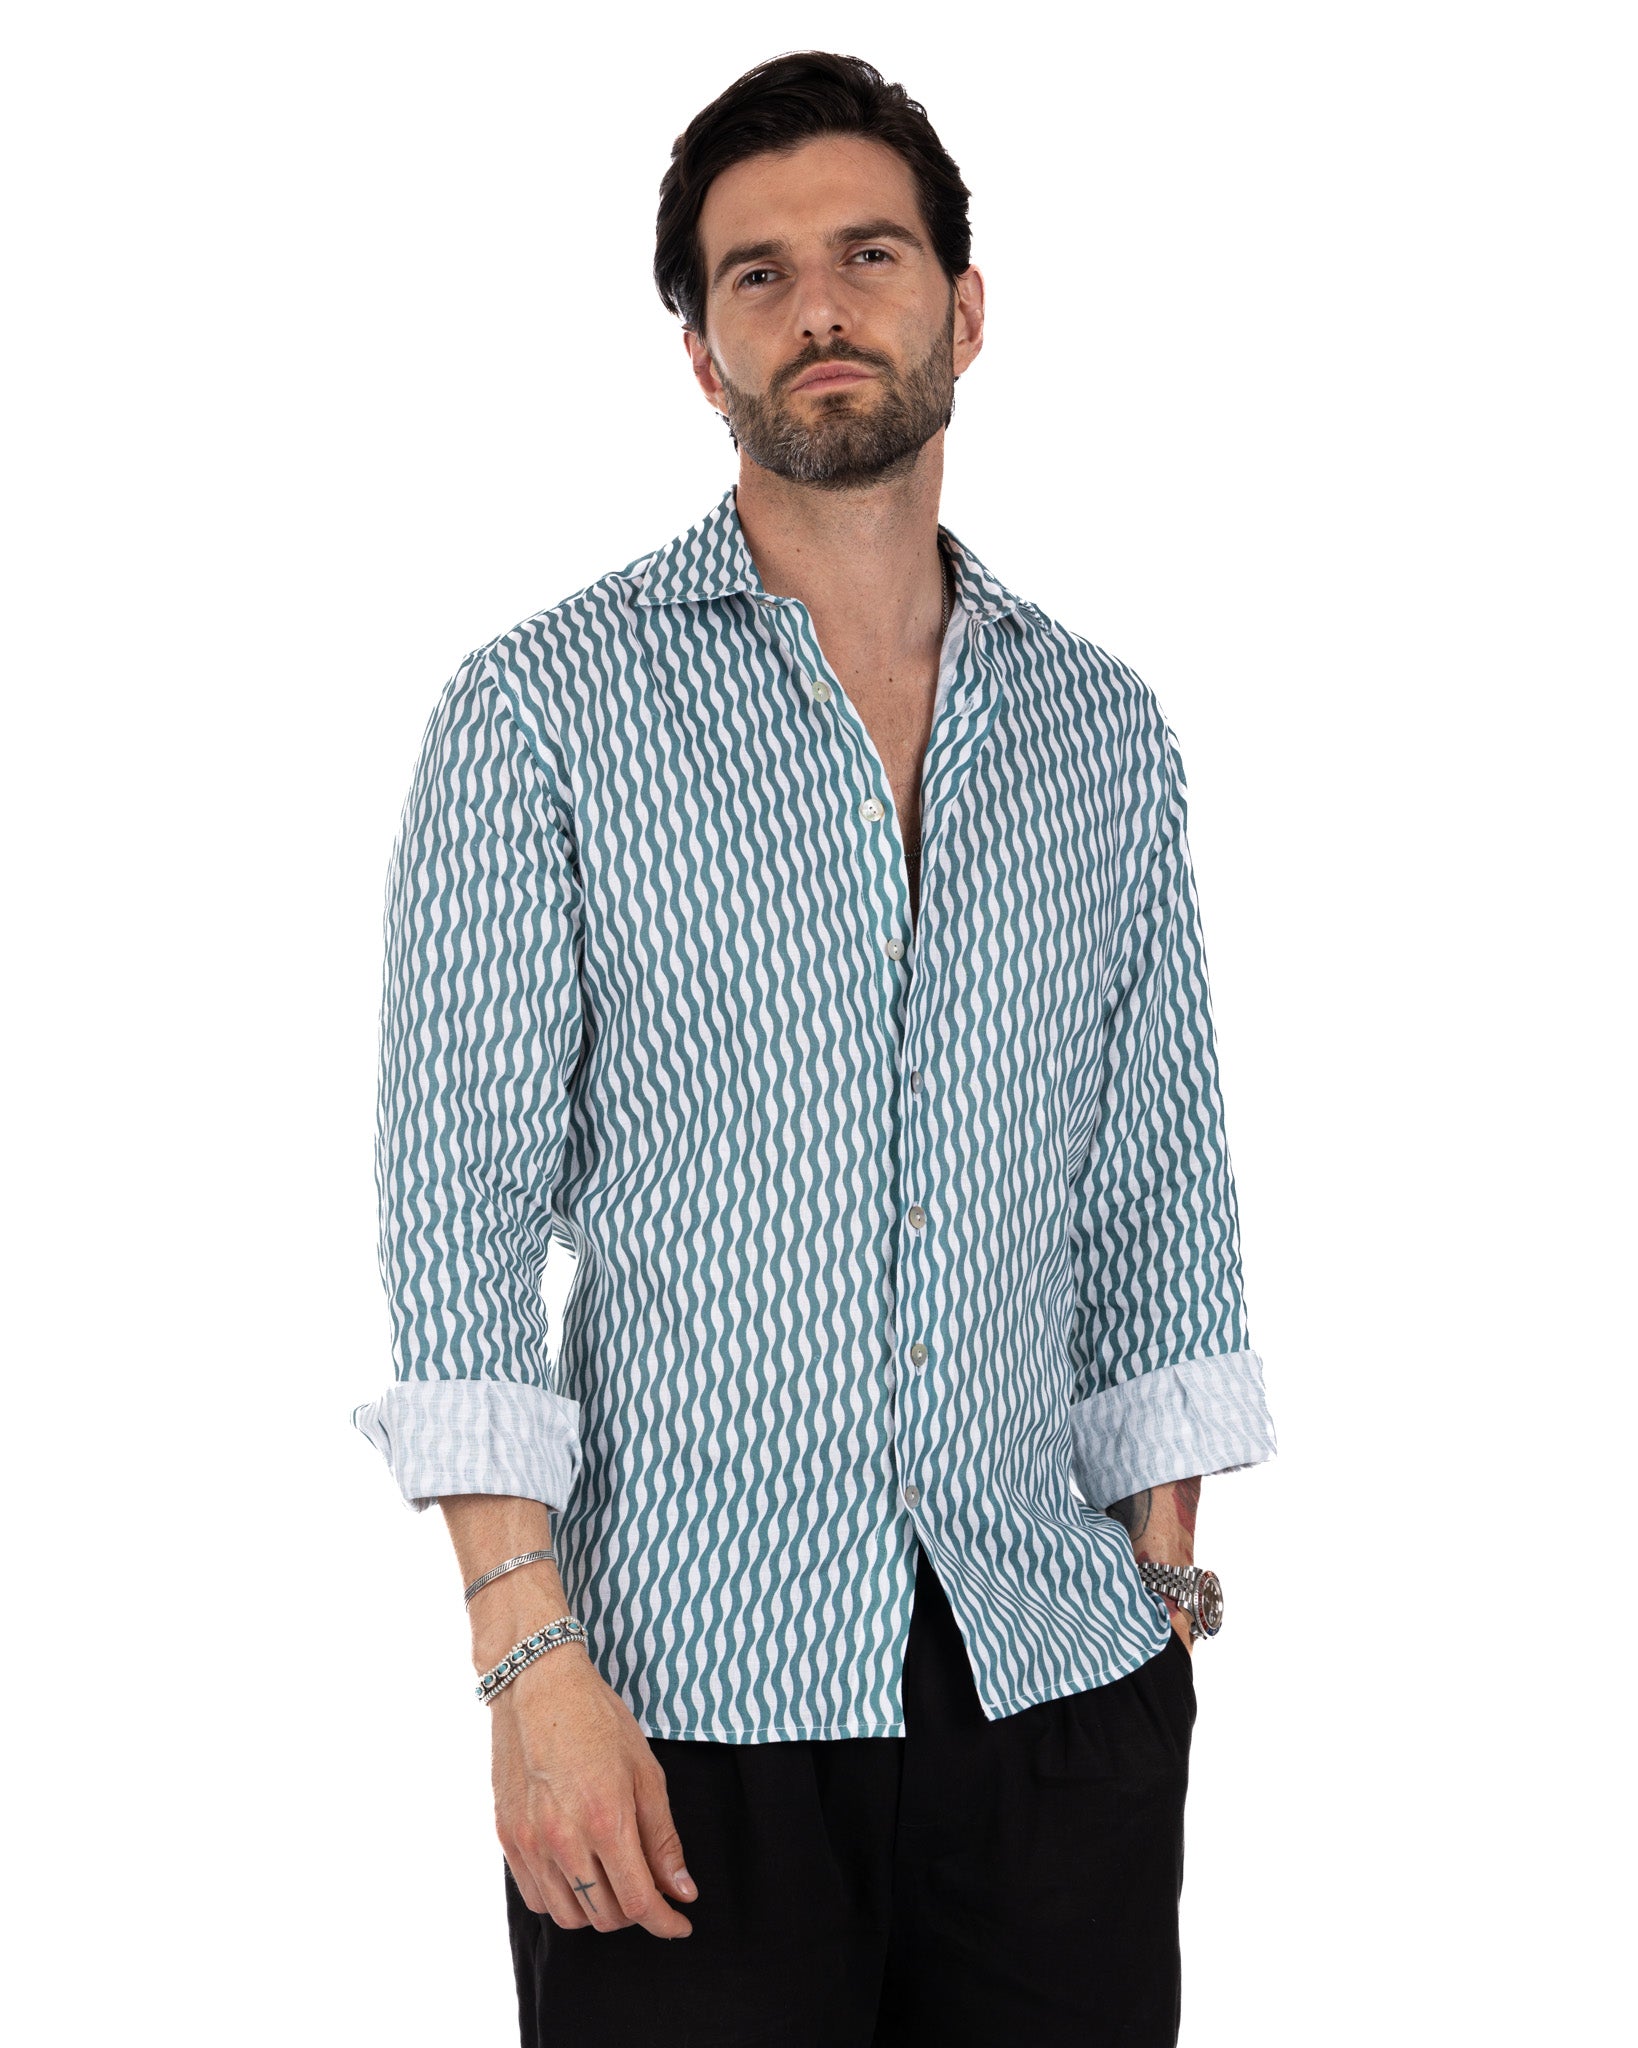 Onda - turquoise printed linen shirt